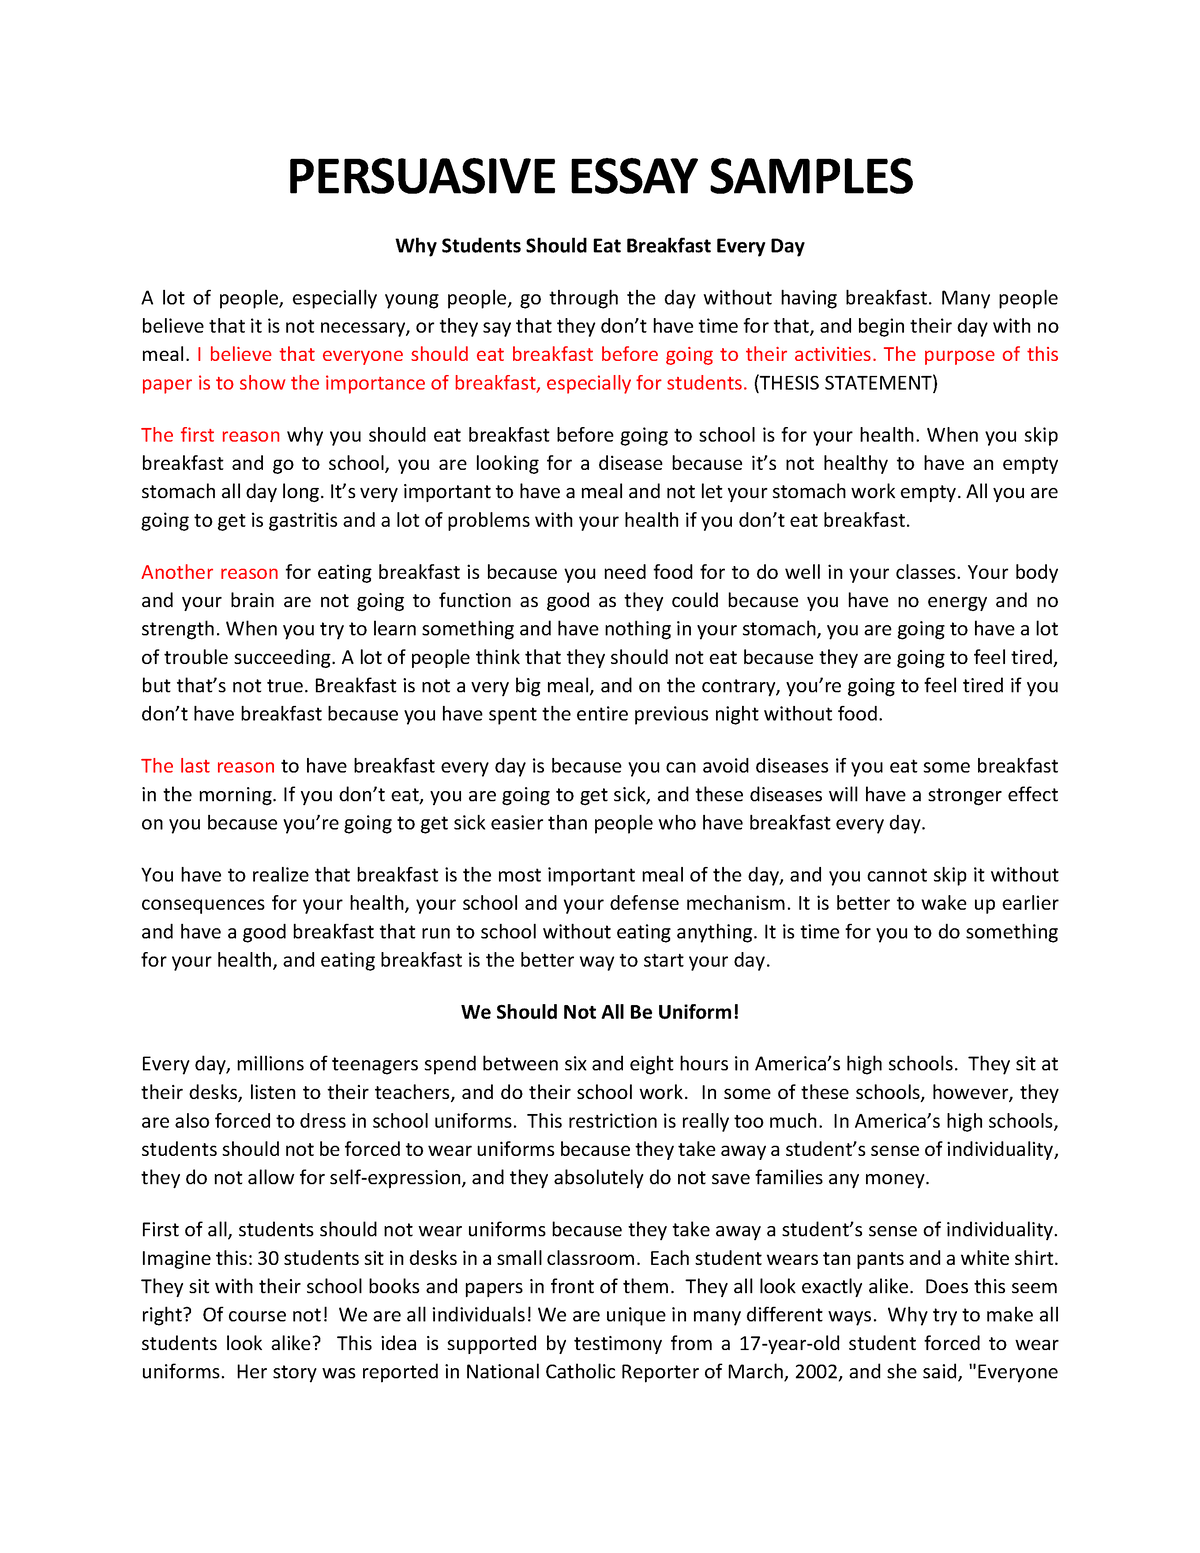 Persuasive-essay-samples - PERSUASIVE ESSAY SAMPLES Why Students Should ...